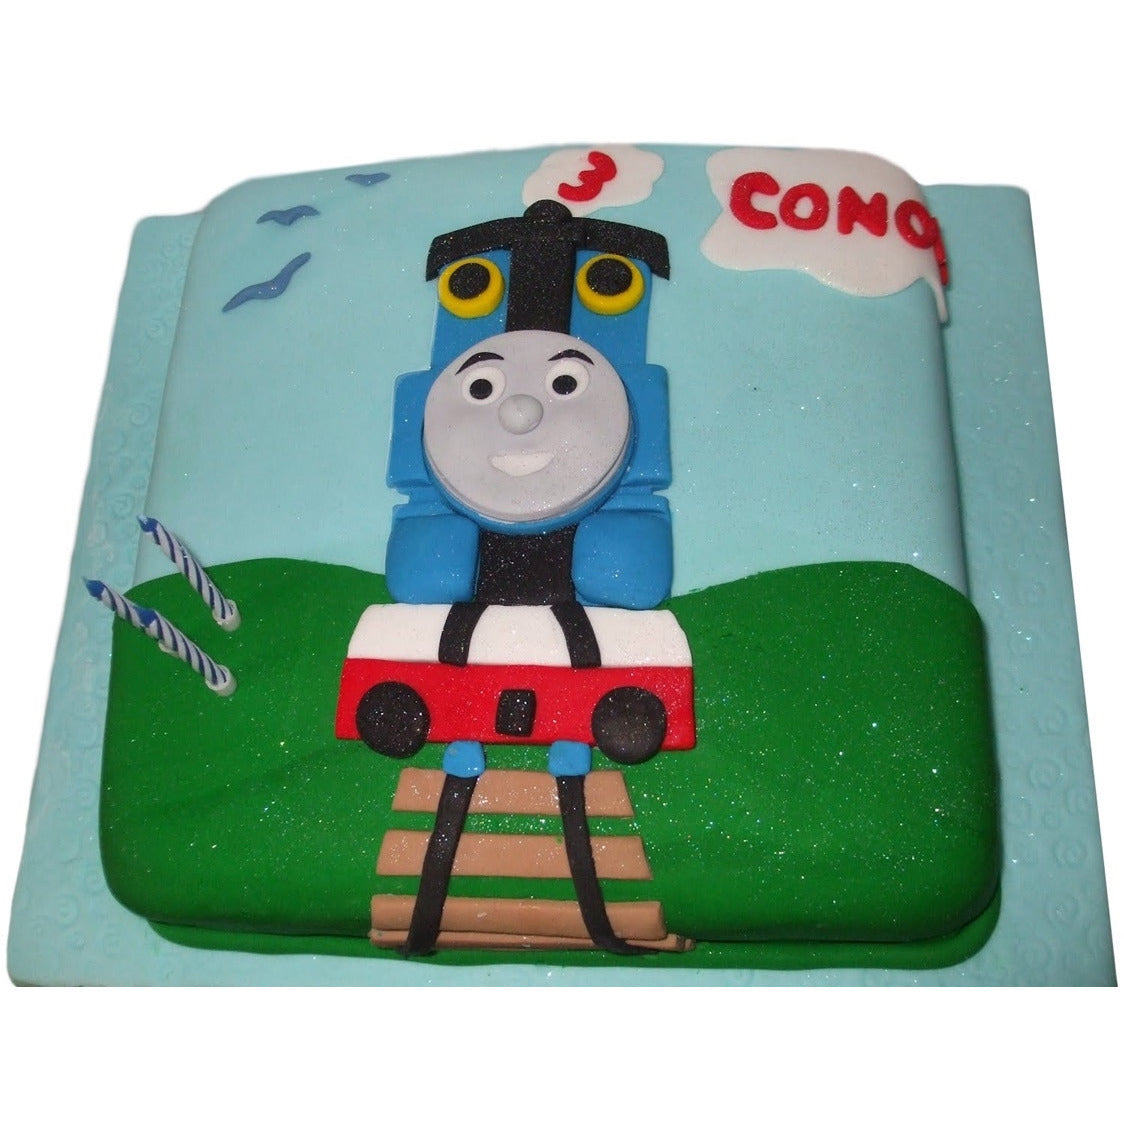 Train engine birthday cake - Say It With Sugar Cake Shop | Facebook